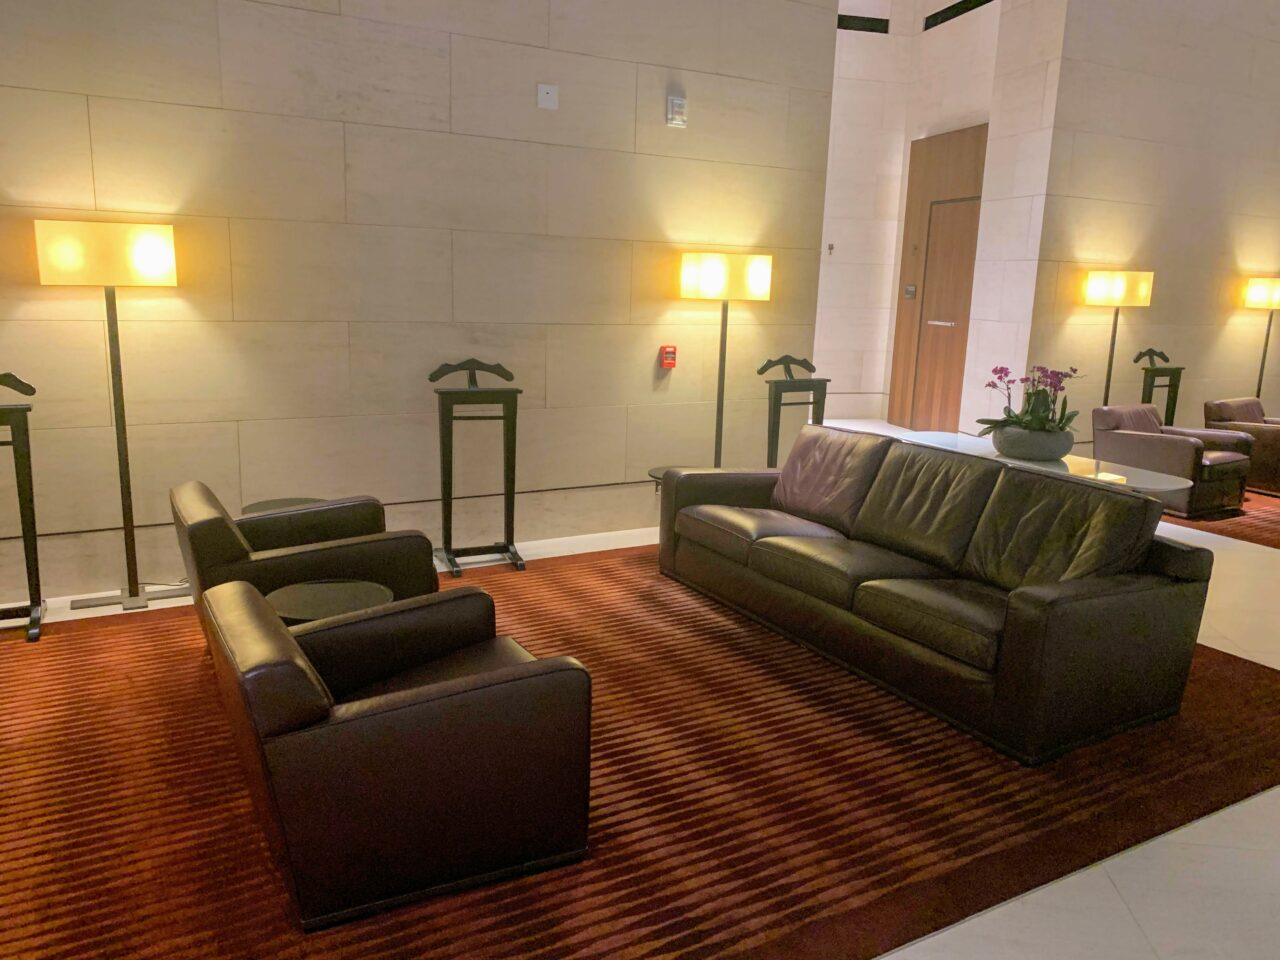 Qatar Airways First Class lounge Seats 